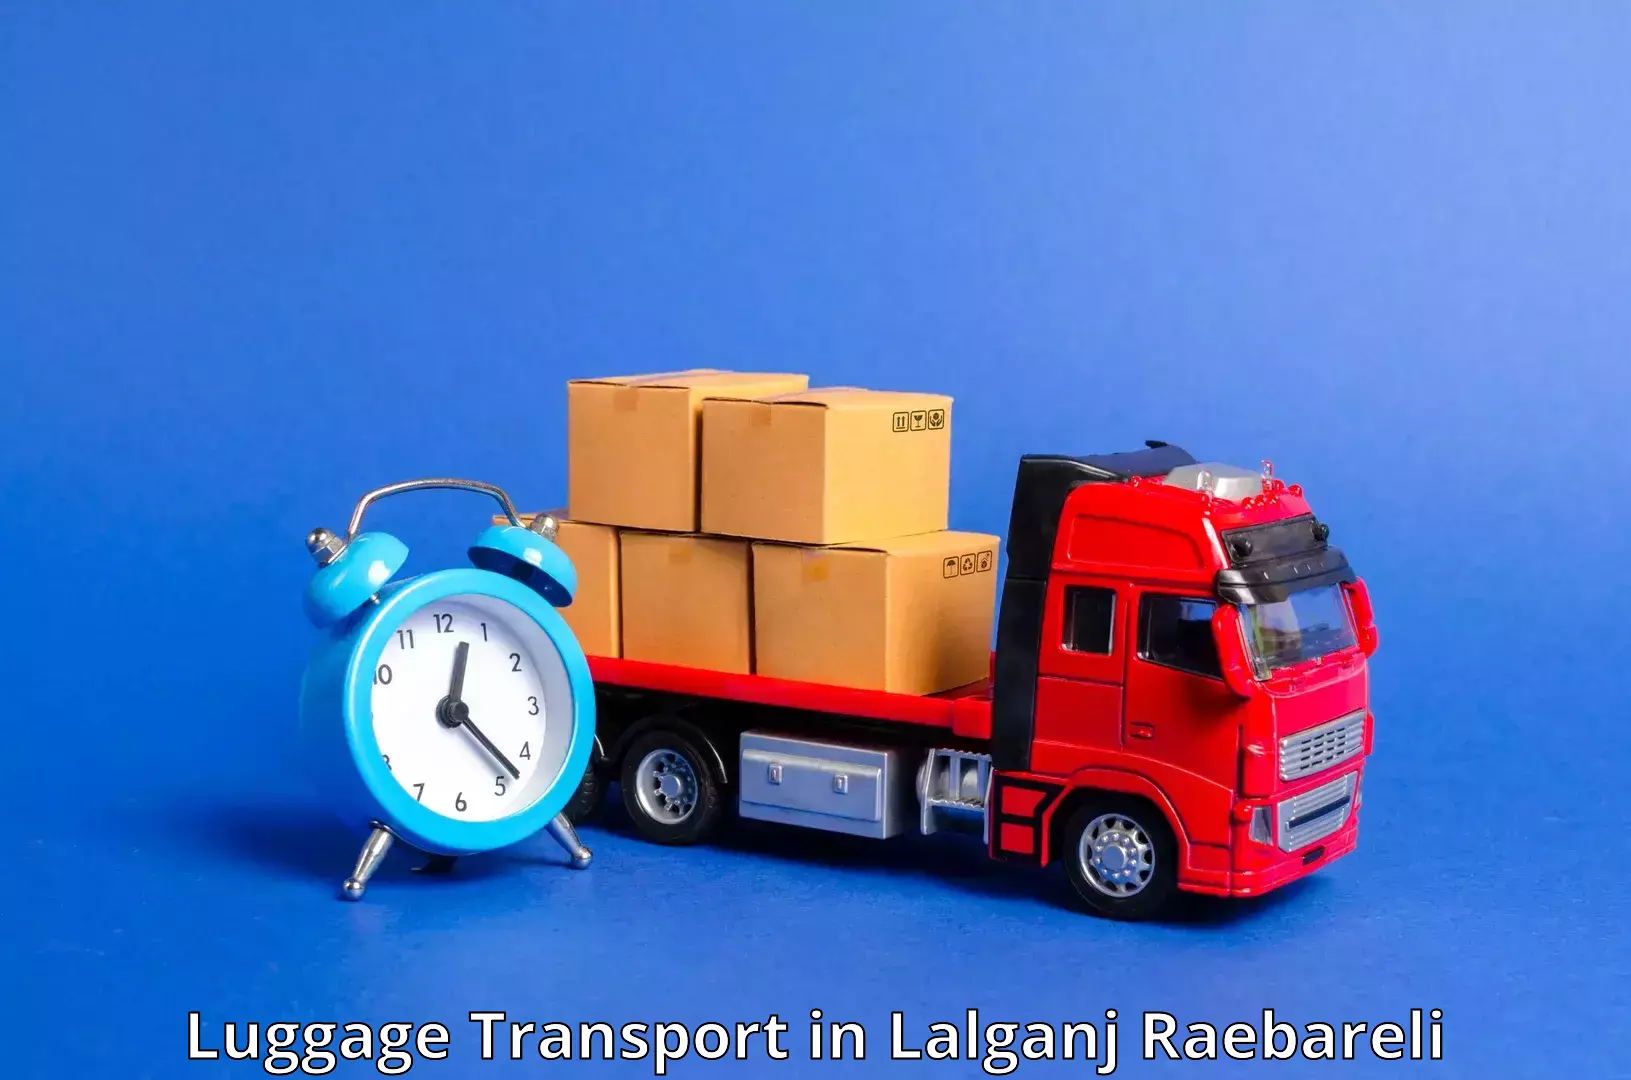 Luggage transport consultancy in Lalganj Raebareli